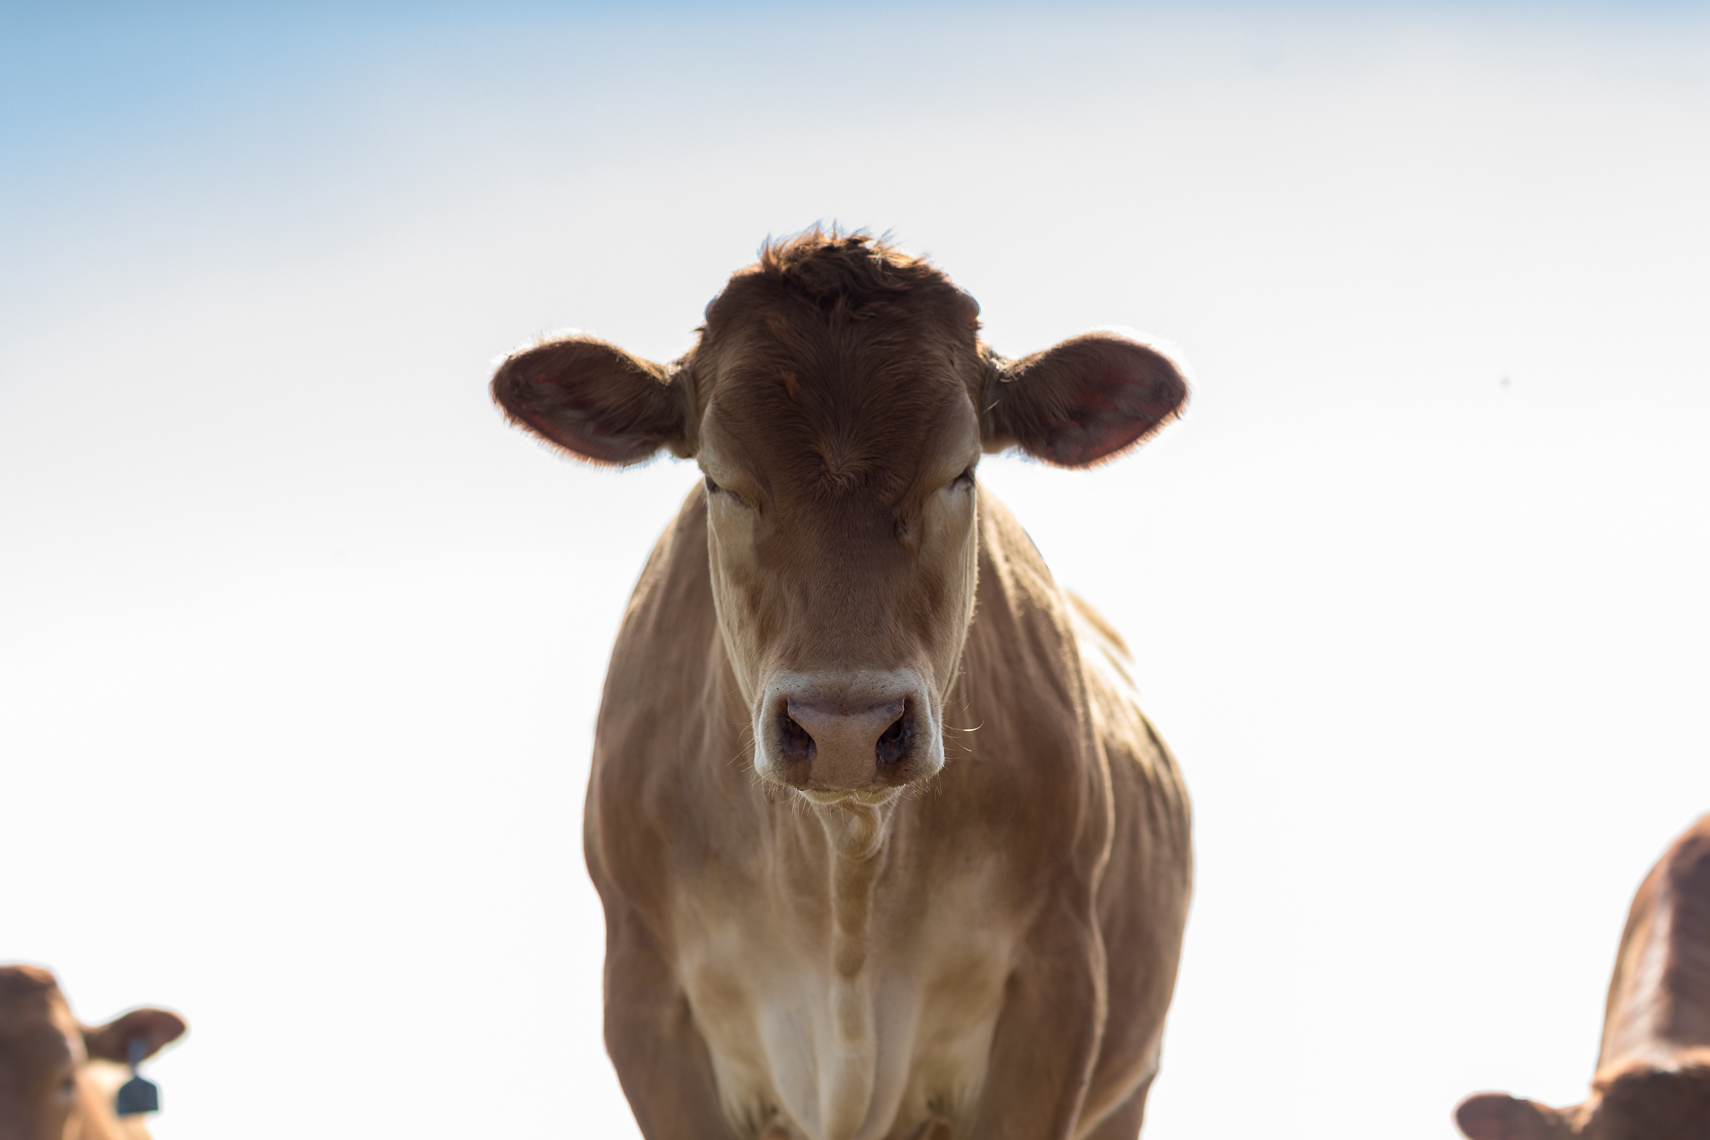 peeler-ranch-cattle-texas-jason-risner-photography-2259